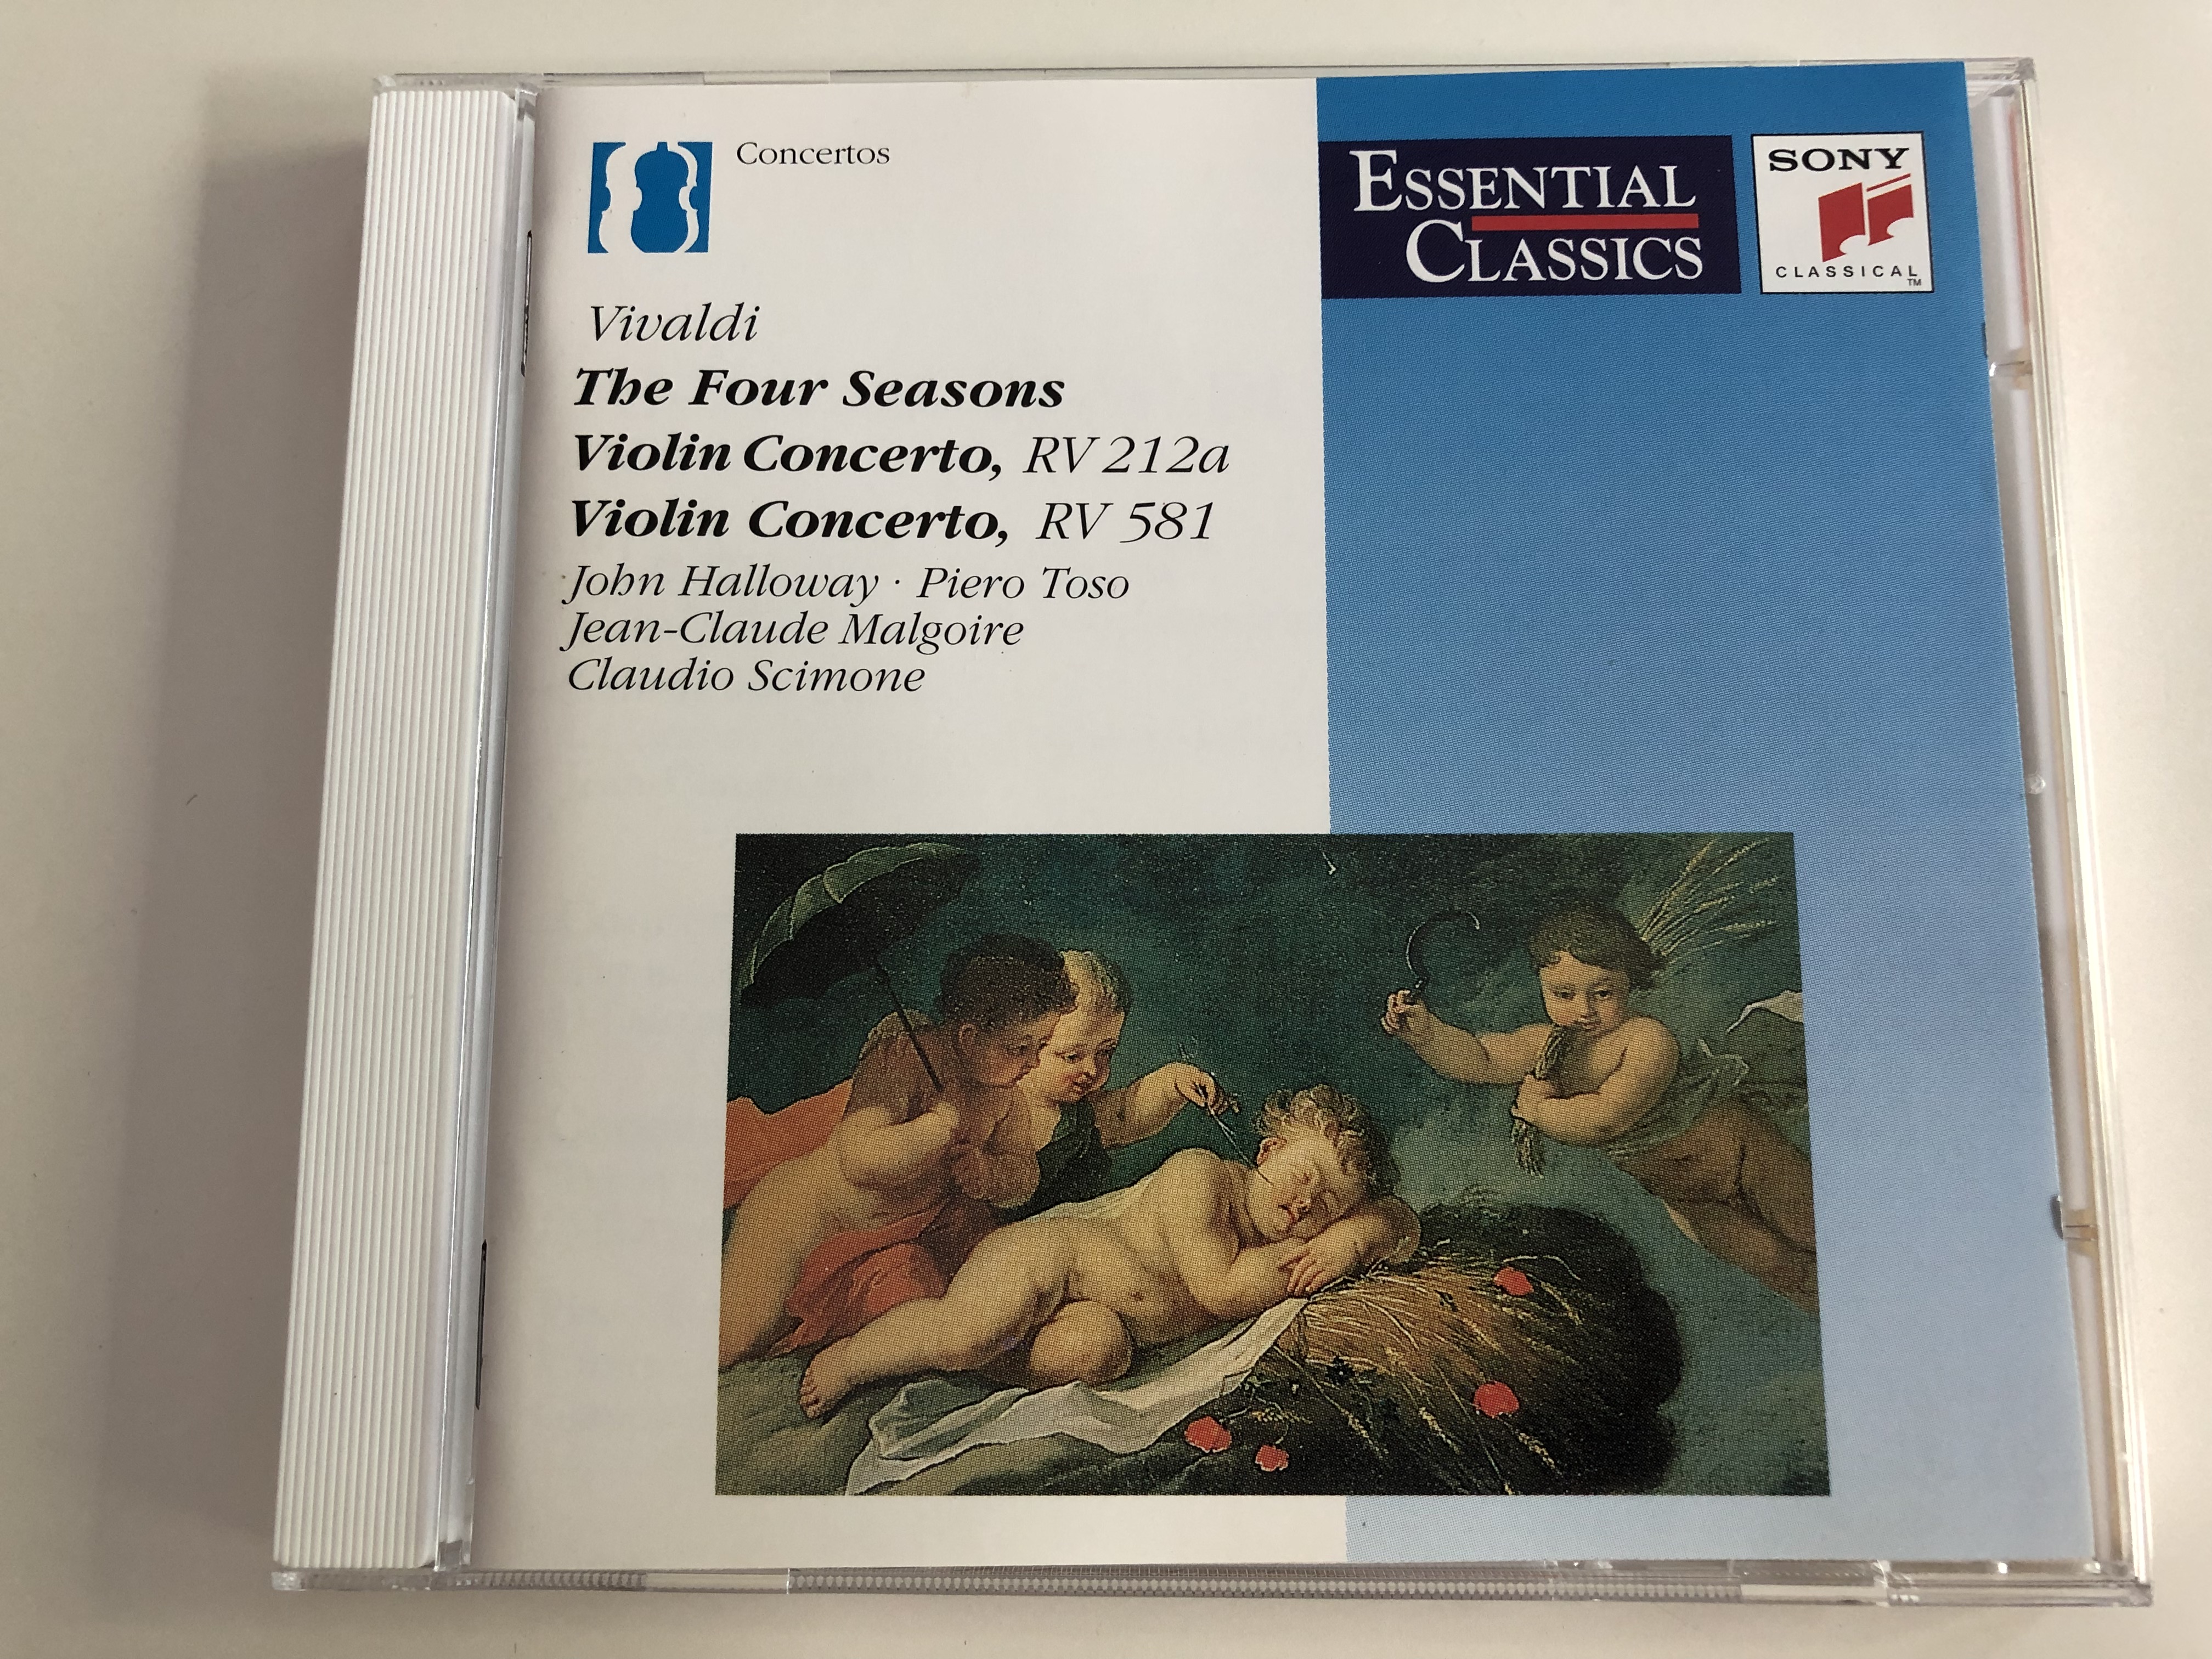 vivaldi-the-four-seasons-violin-concerto-rv212a-violin-concerto-rv-581-john-halloway-piero-toso-jean-claude-malgorie-claudio-scimone-essential-classics-audio-cd-1991-sbk-47-662-1-.jpg